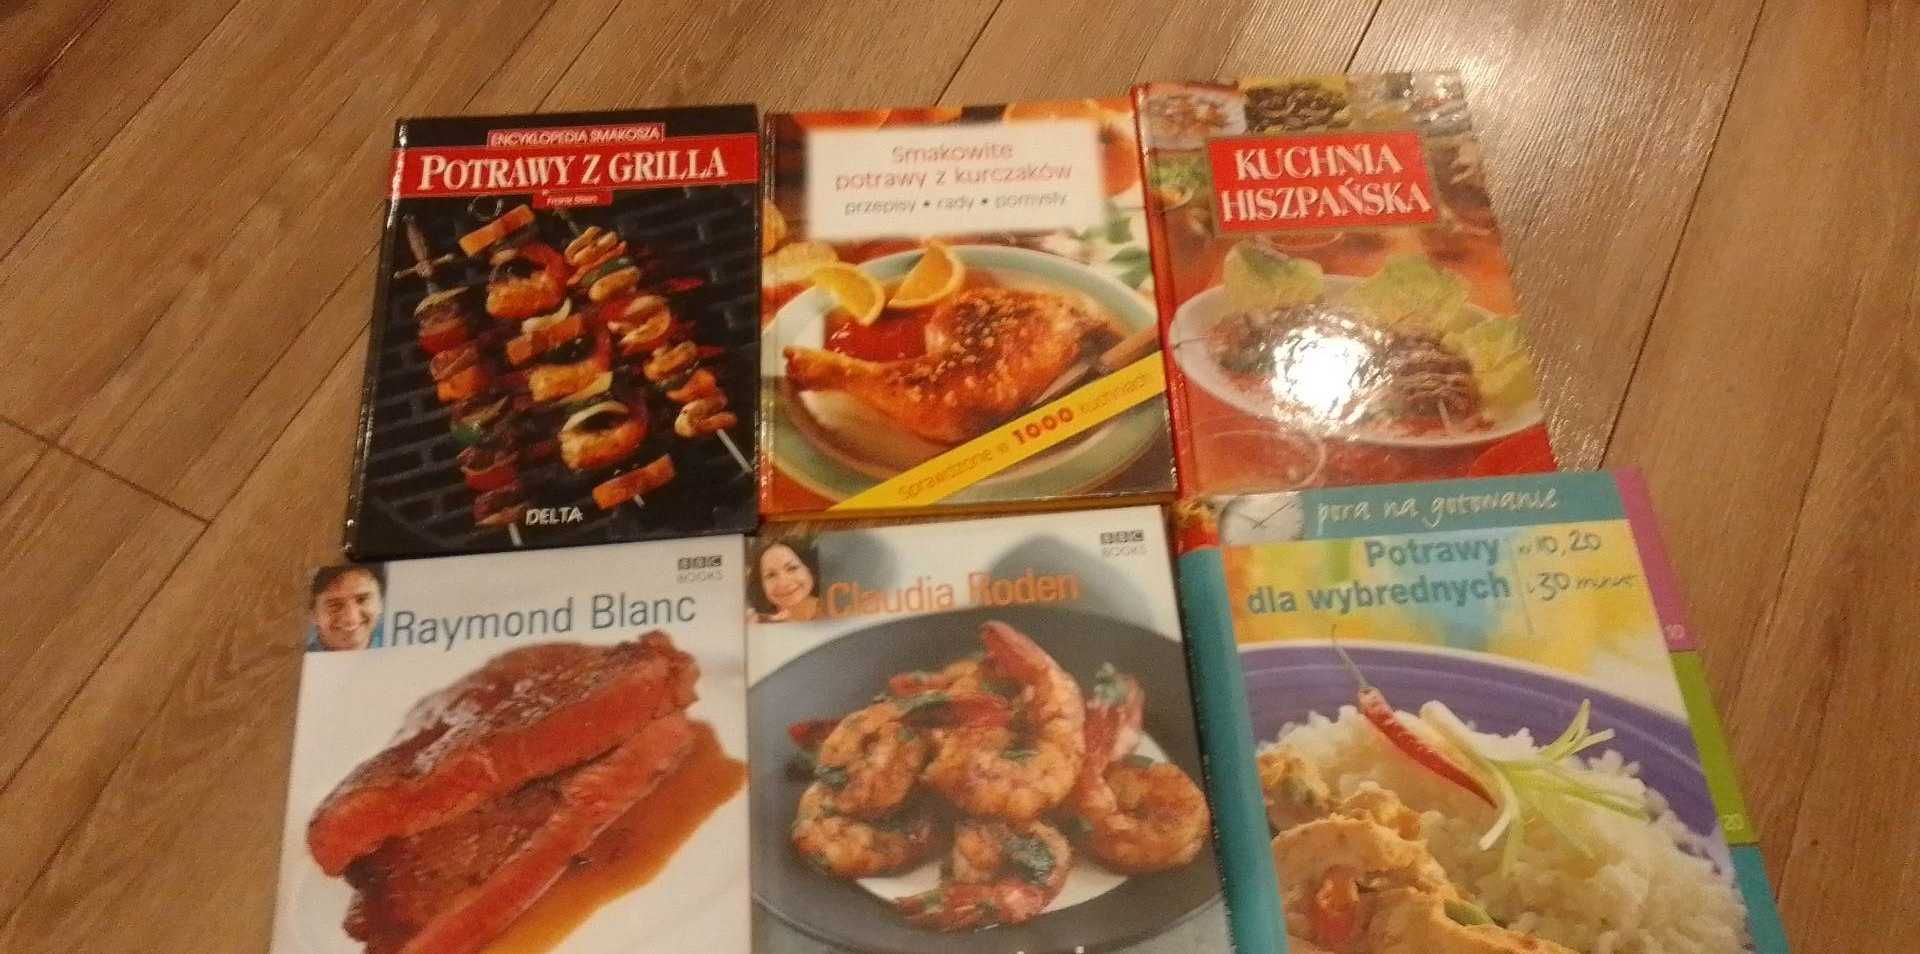 Książki Kulinarne różne zestawy - poradniki, książki kulinarne